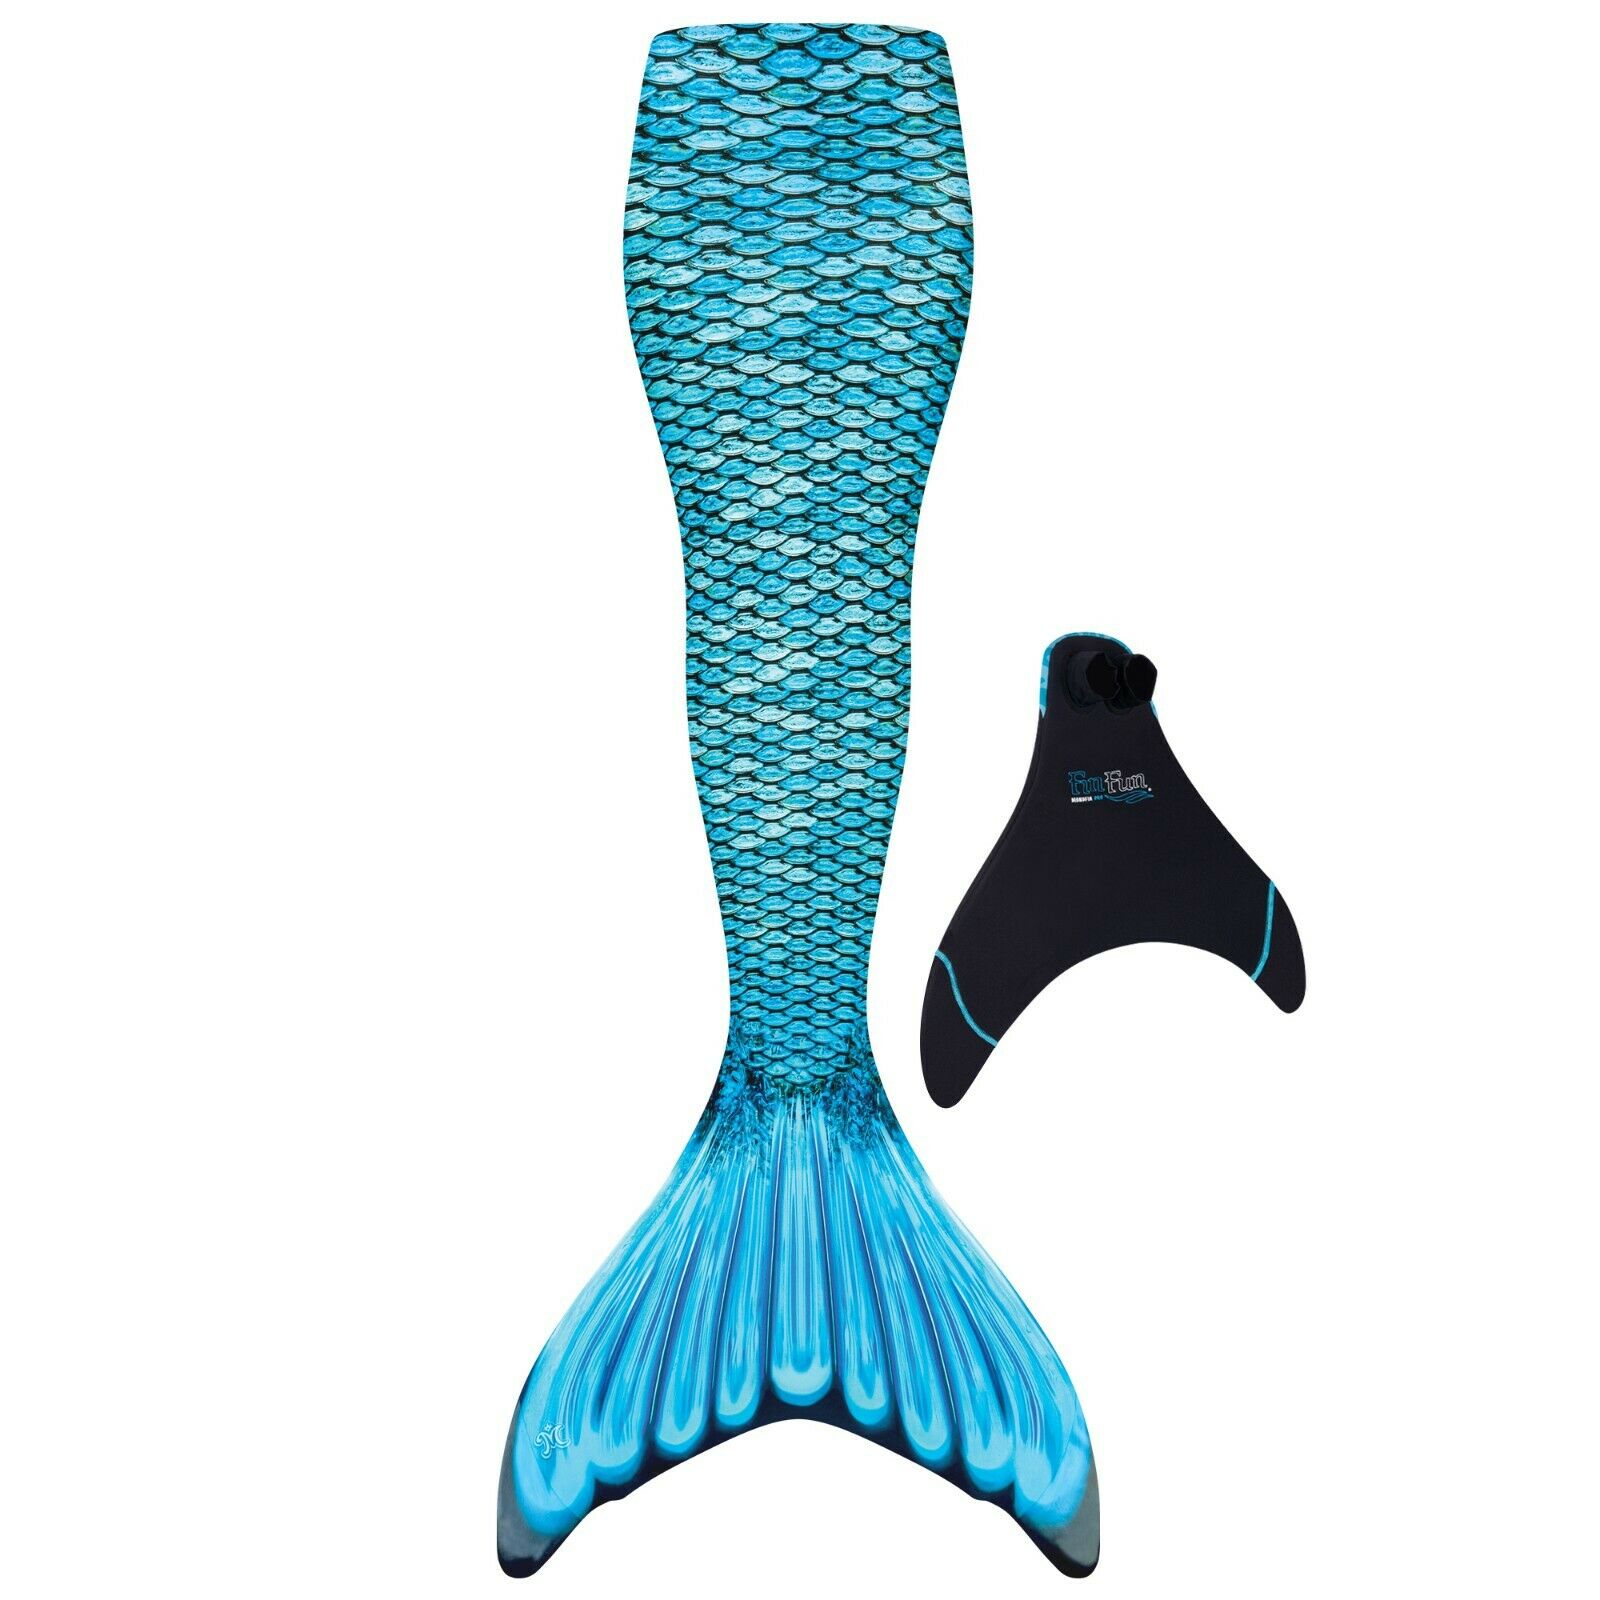 Kids Size Fin Fun Mermaid Tails, Swimming, Swimmable, Includes Monofin Flipper